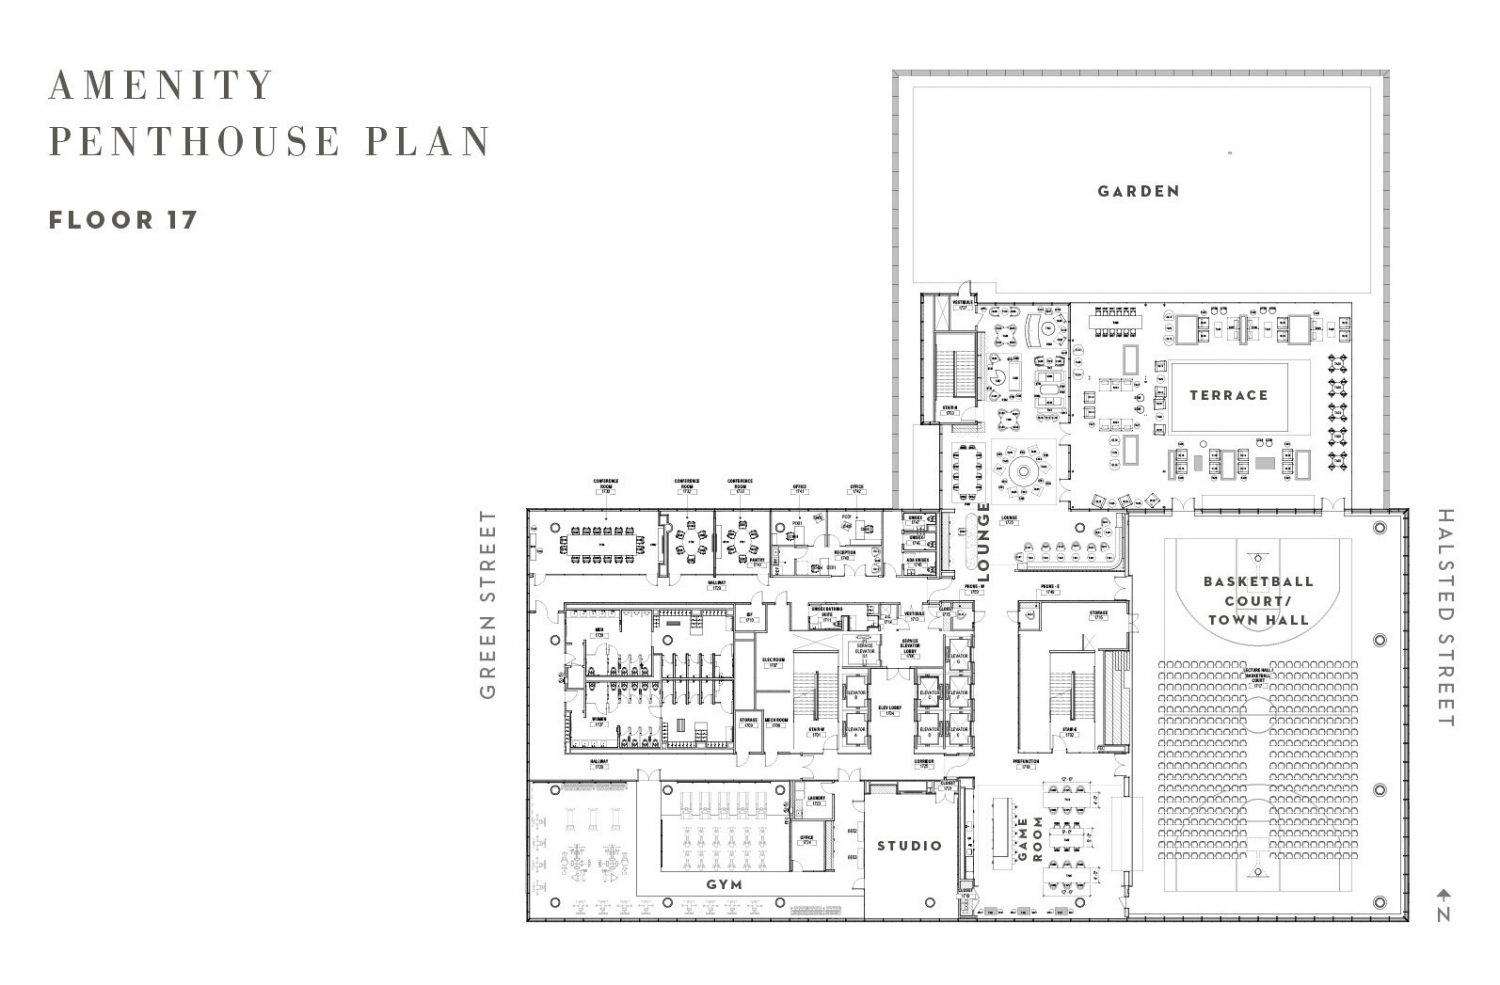 Amenity (17th) floor plan